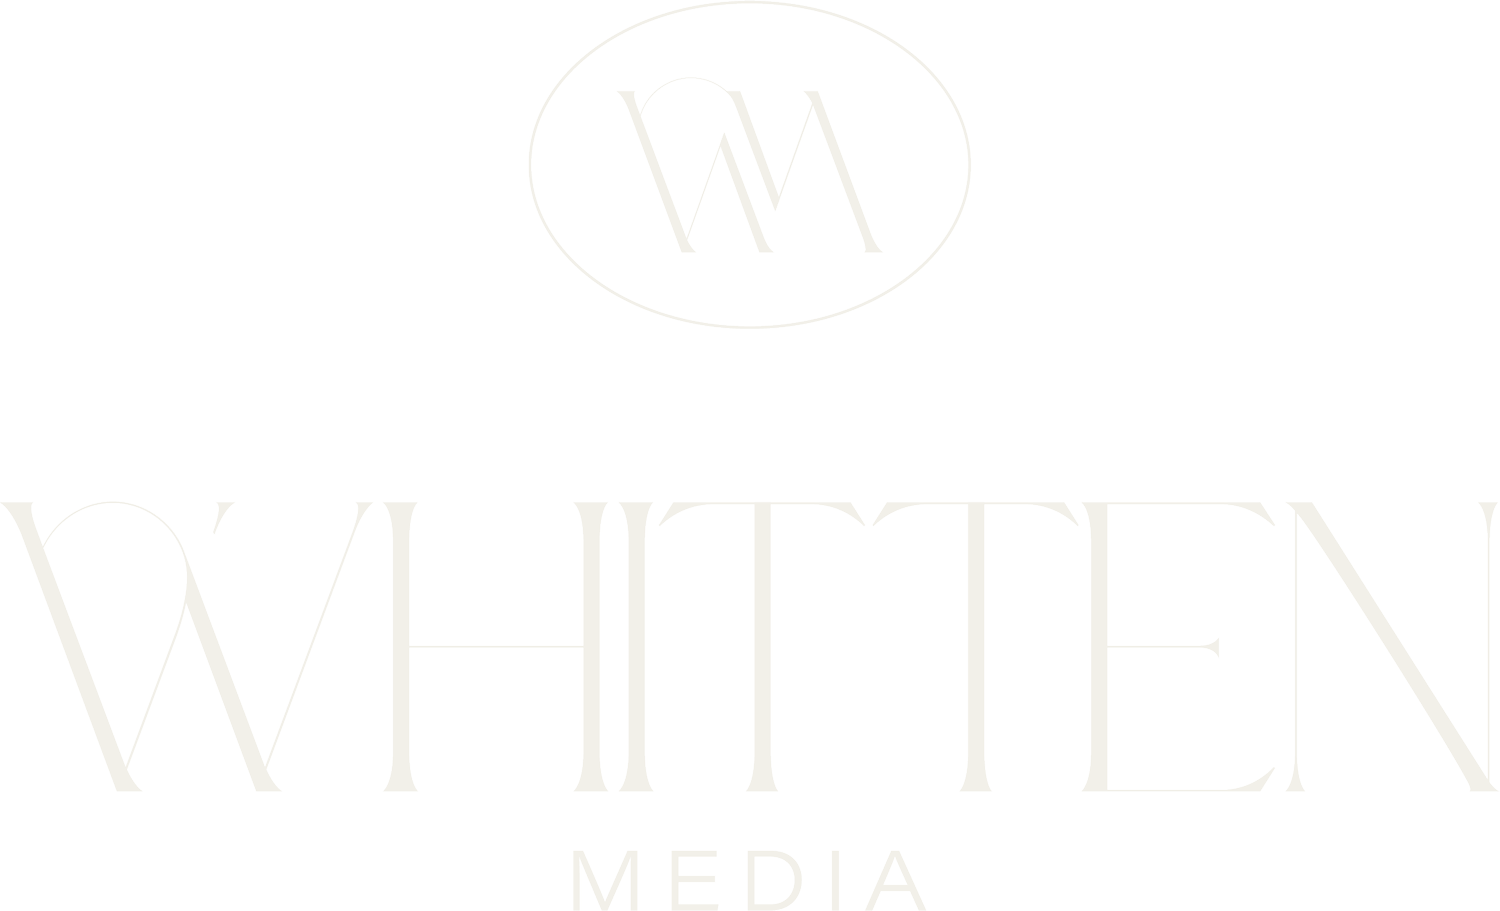 Whitten Media